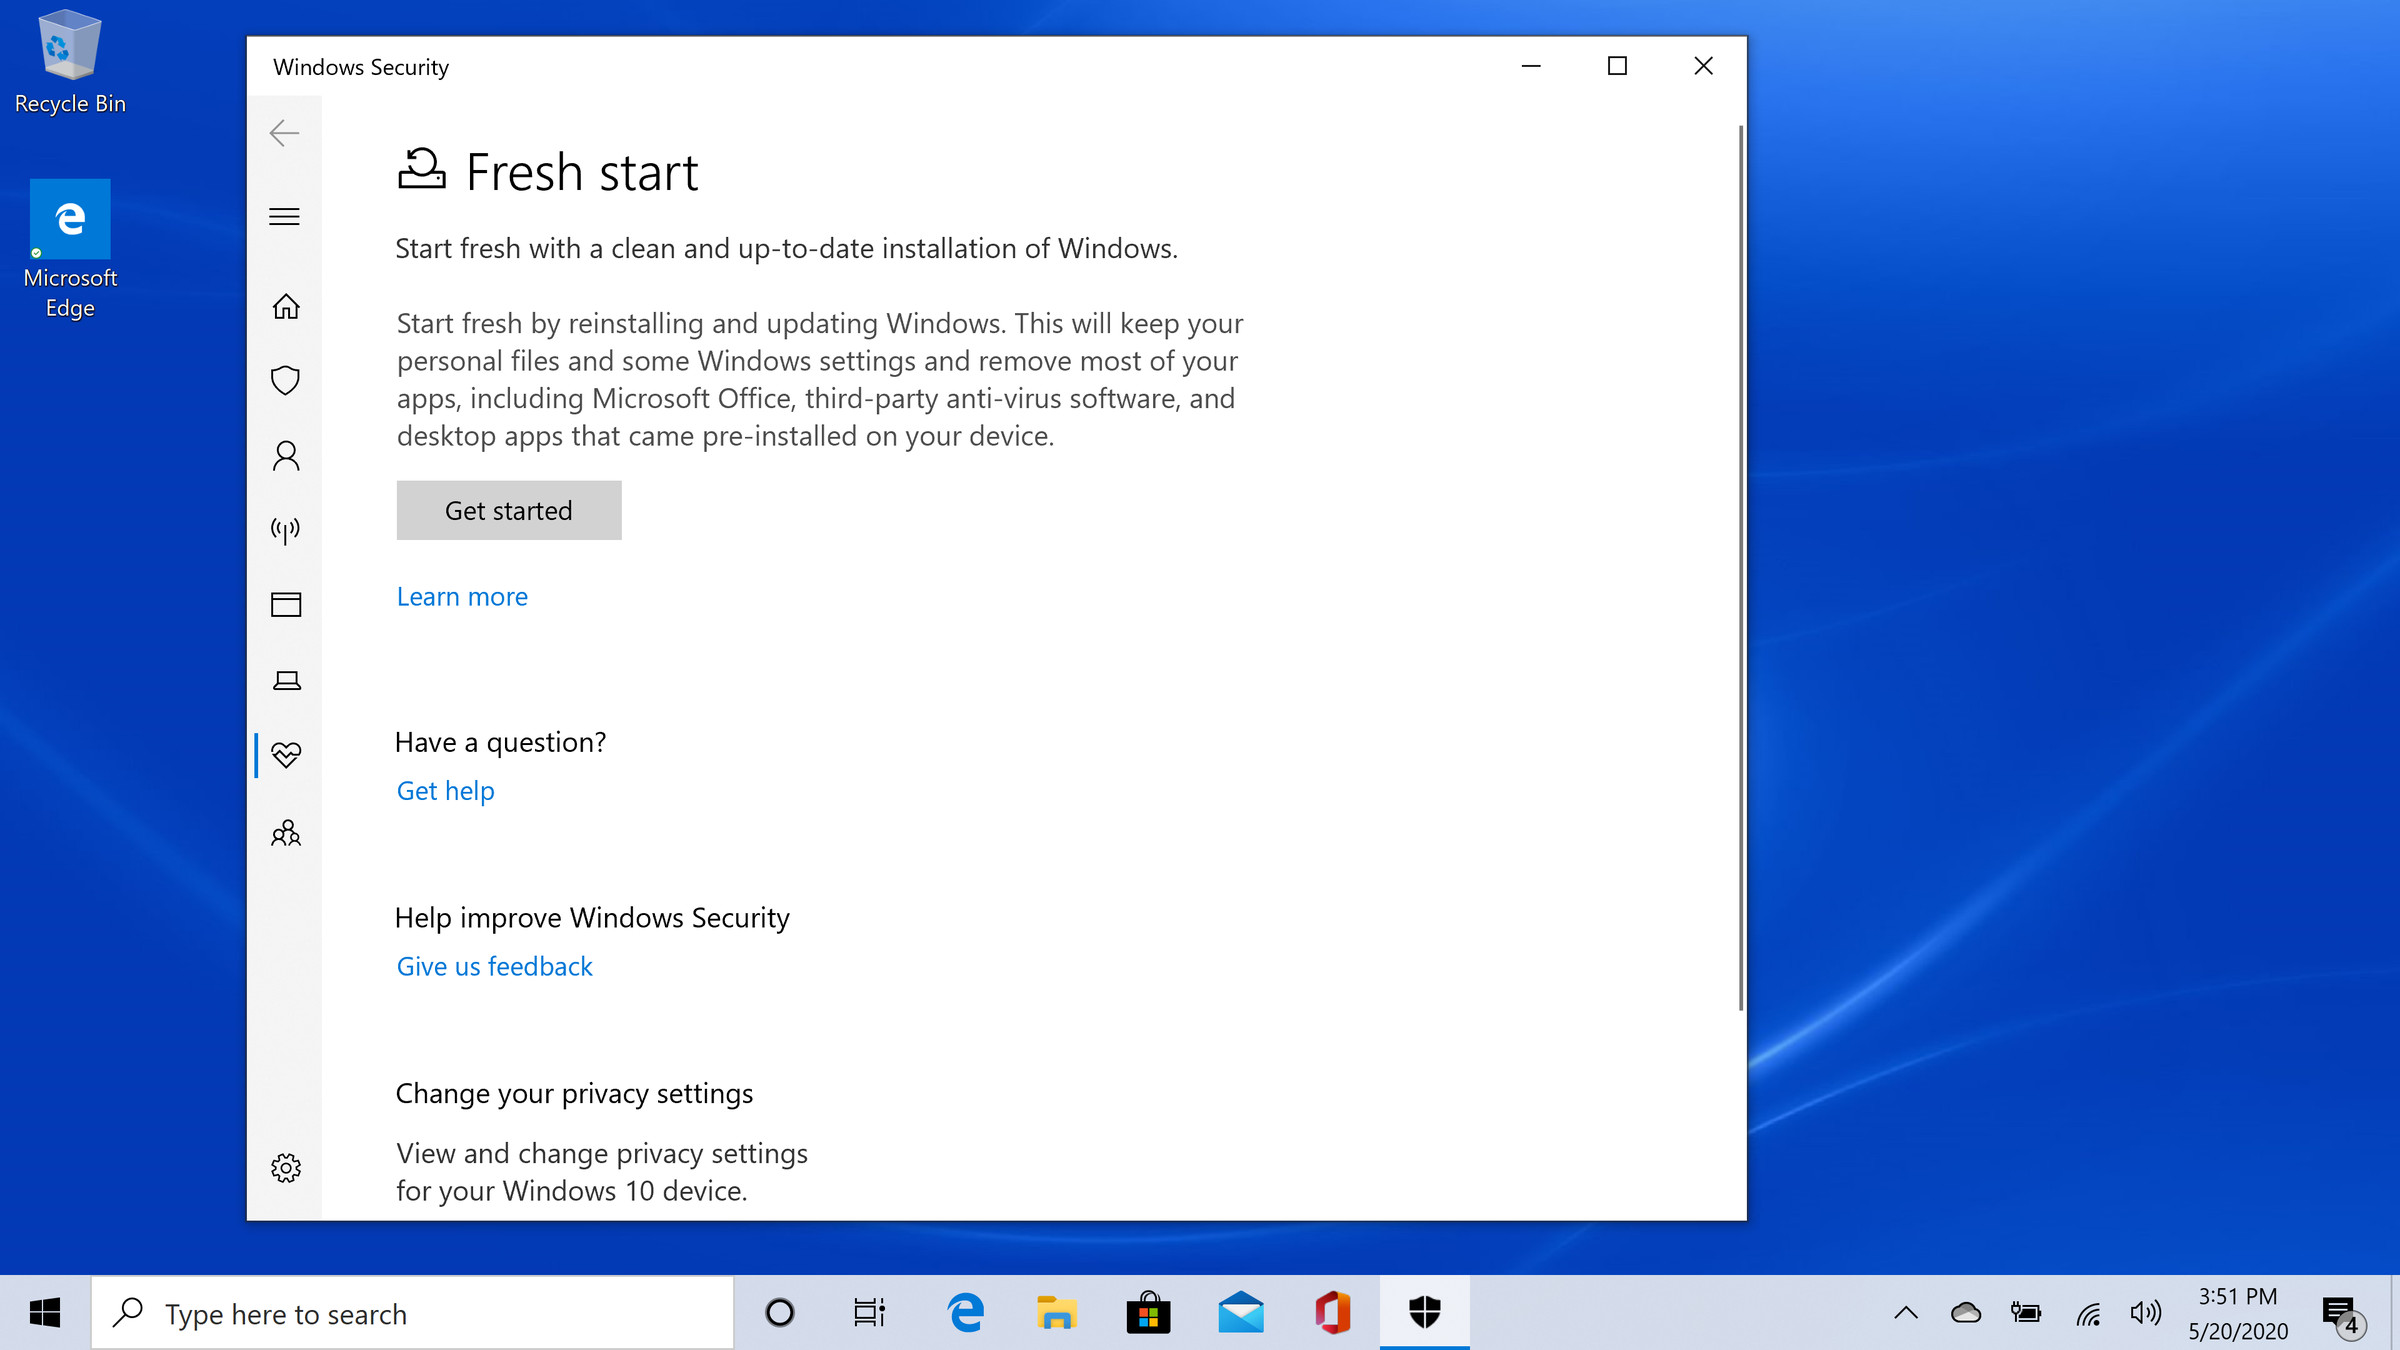 Windows 10 Fresh start